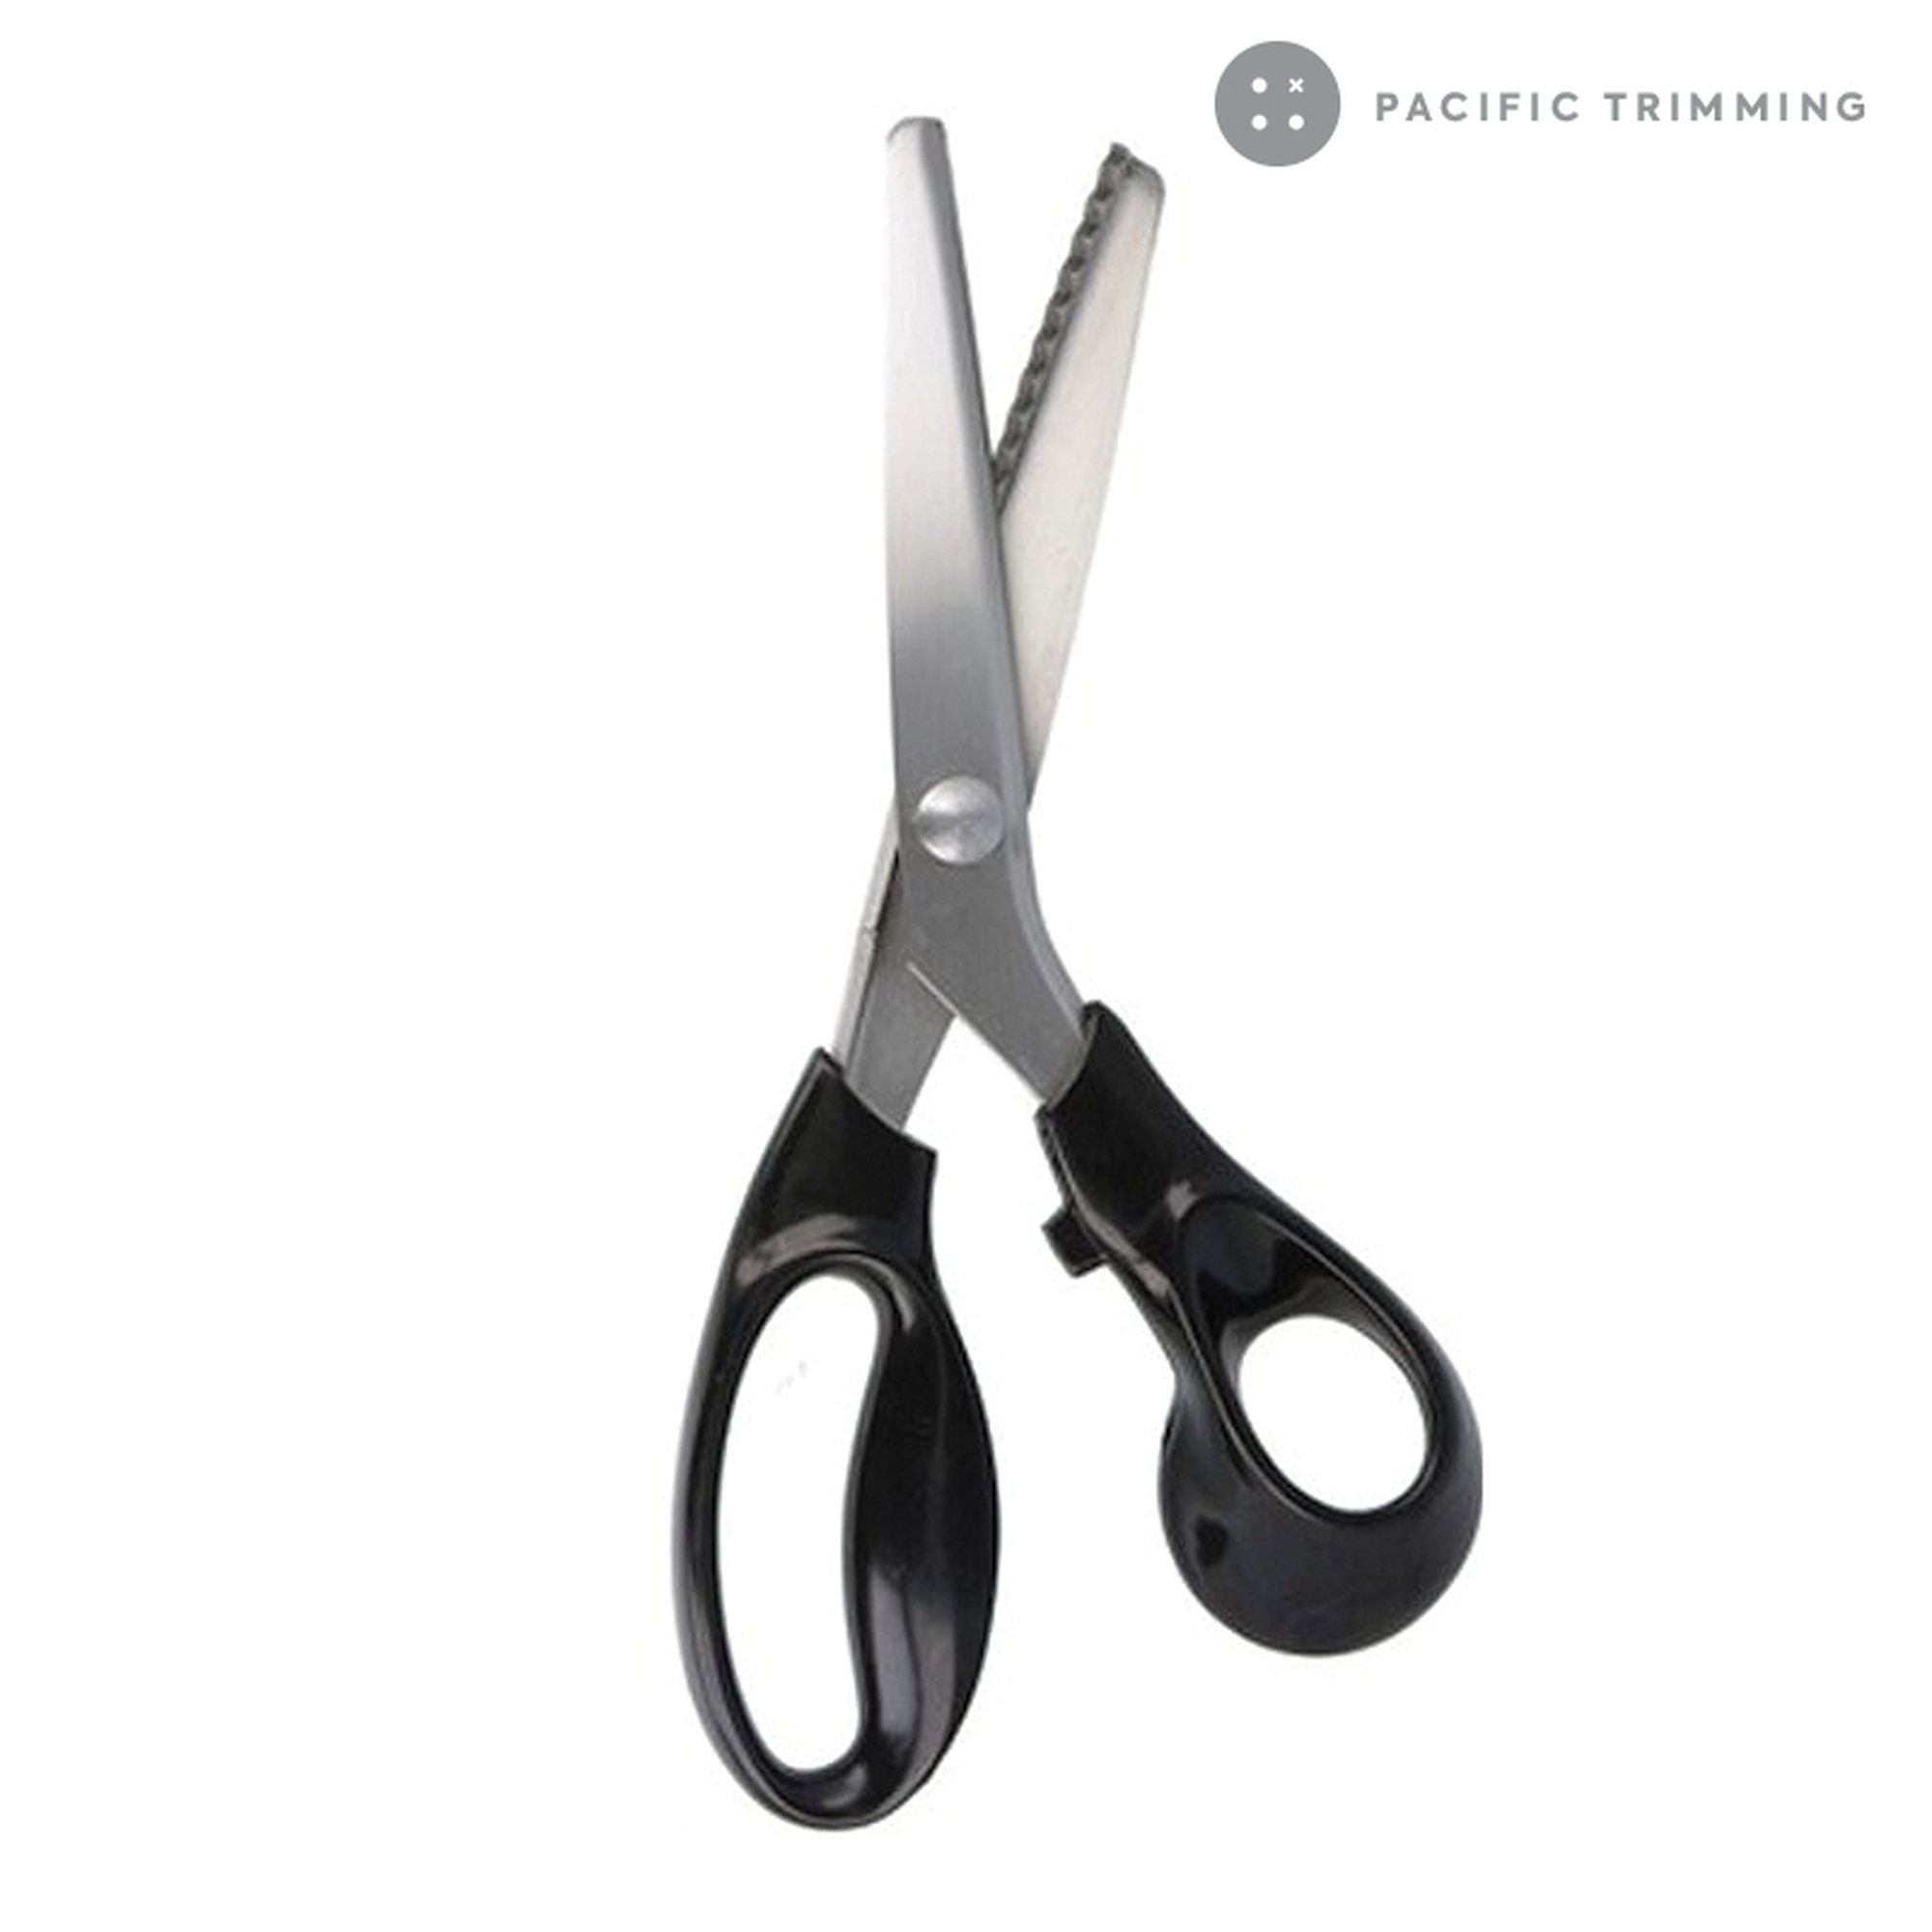 Keedil Pinking Shears Scissors